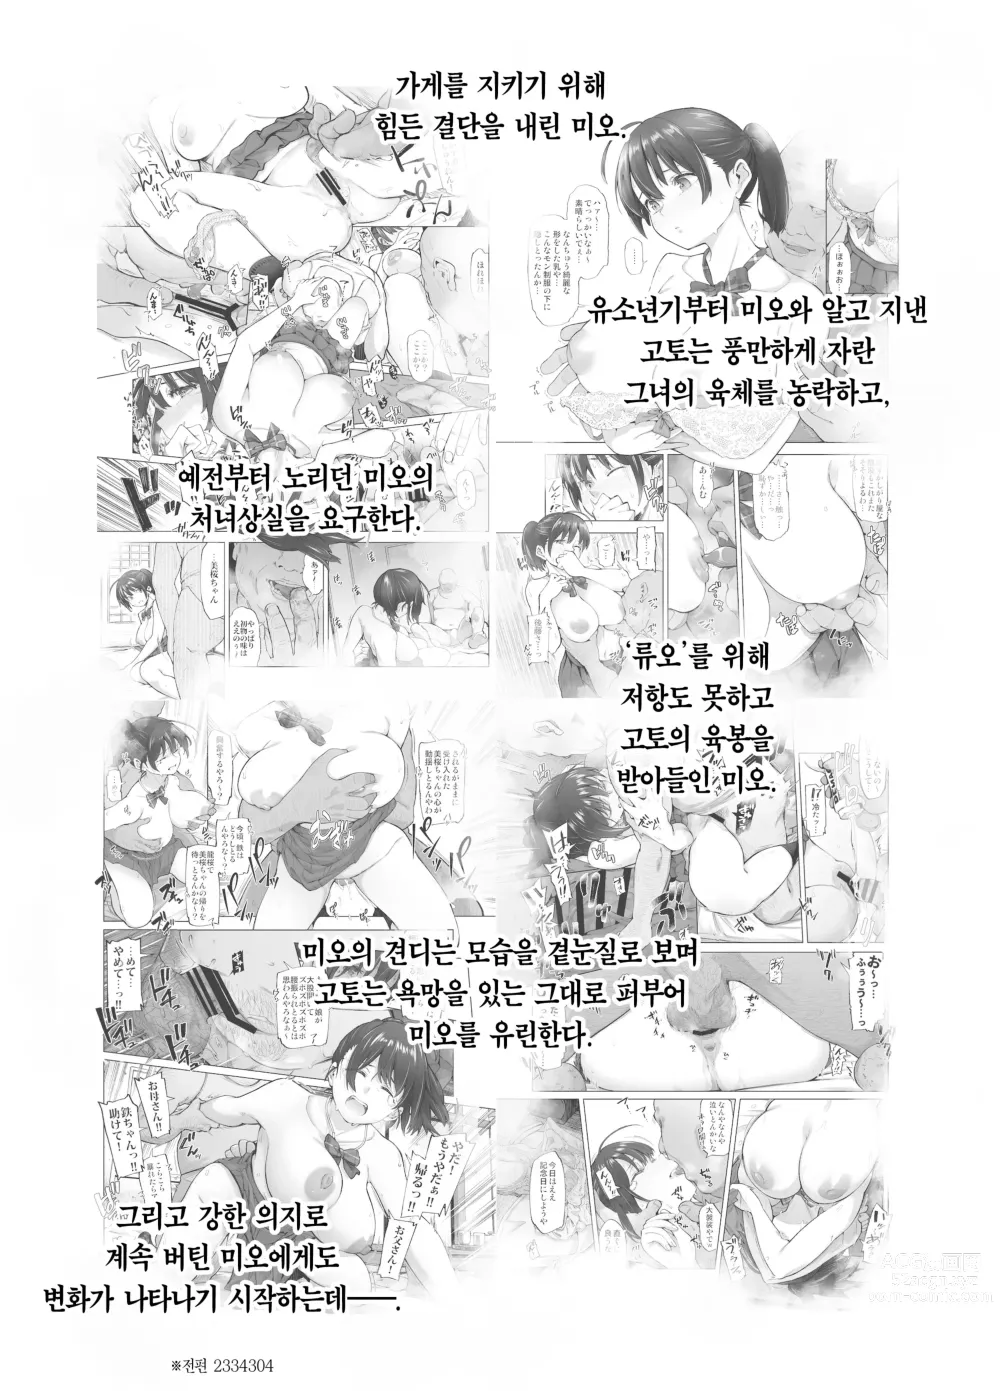 Page 3 of doujinshi 찢어진 벚꽃 흩날리는 꽃잎 꽃봉오리 피어오르다